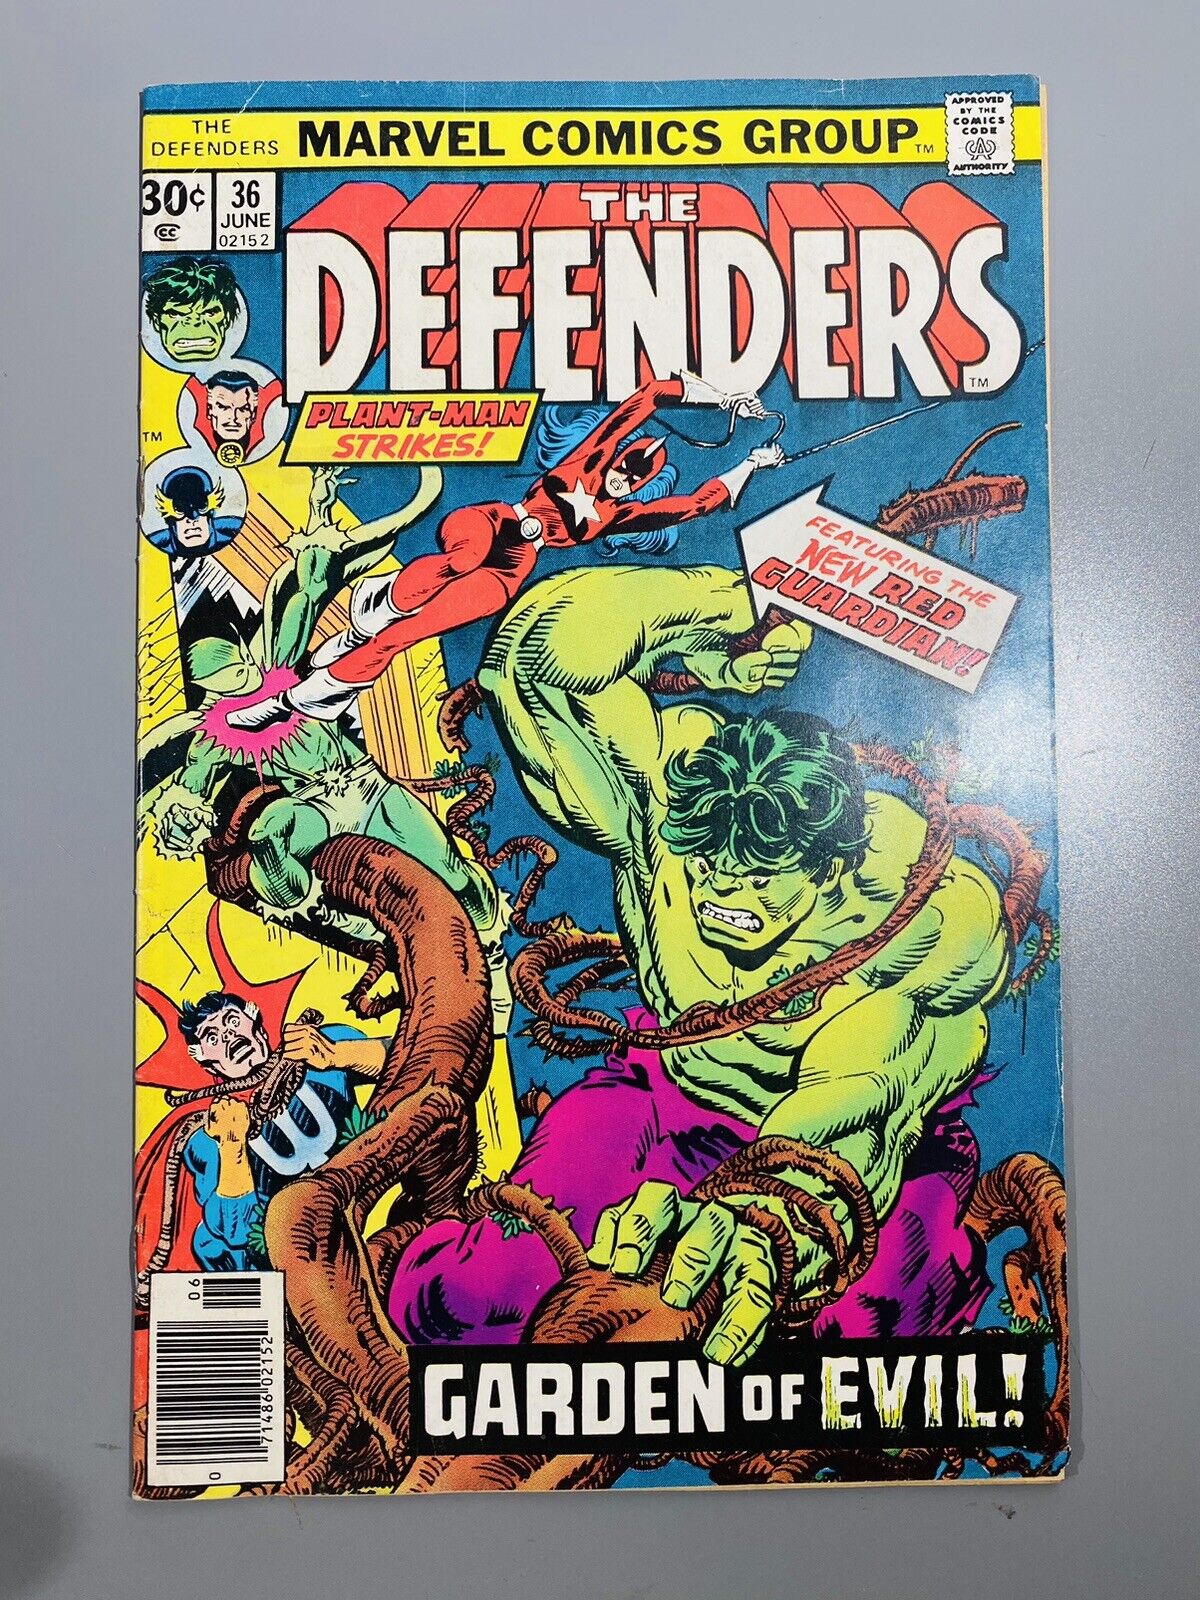 * RARE 30 Cent Price Variant* Defenders #36 Marvel 1976 1st Print BEAUTY